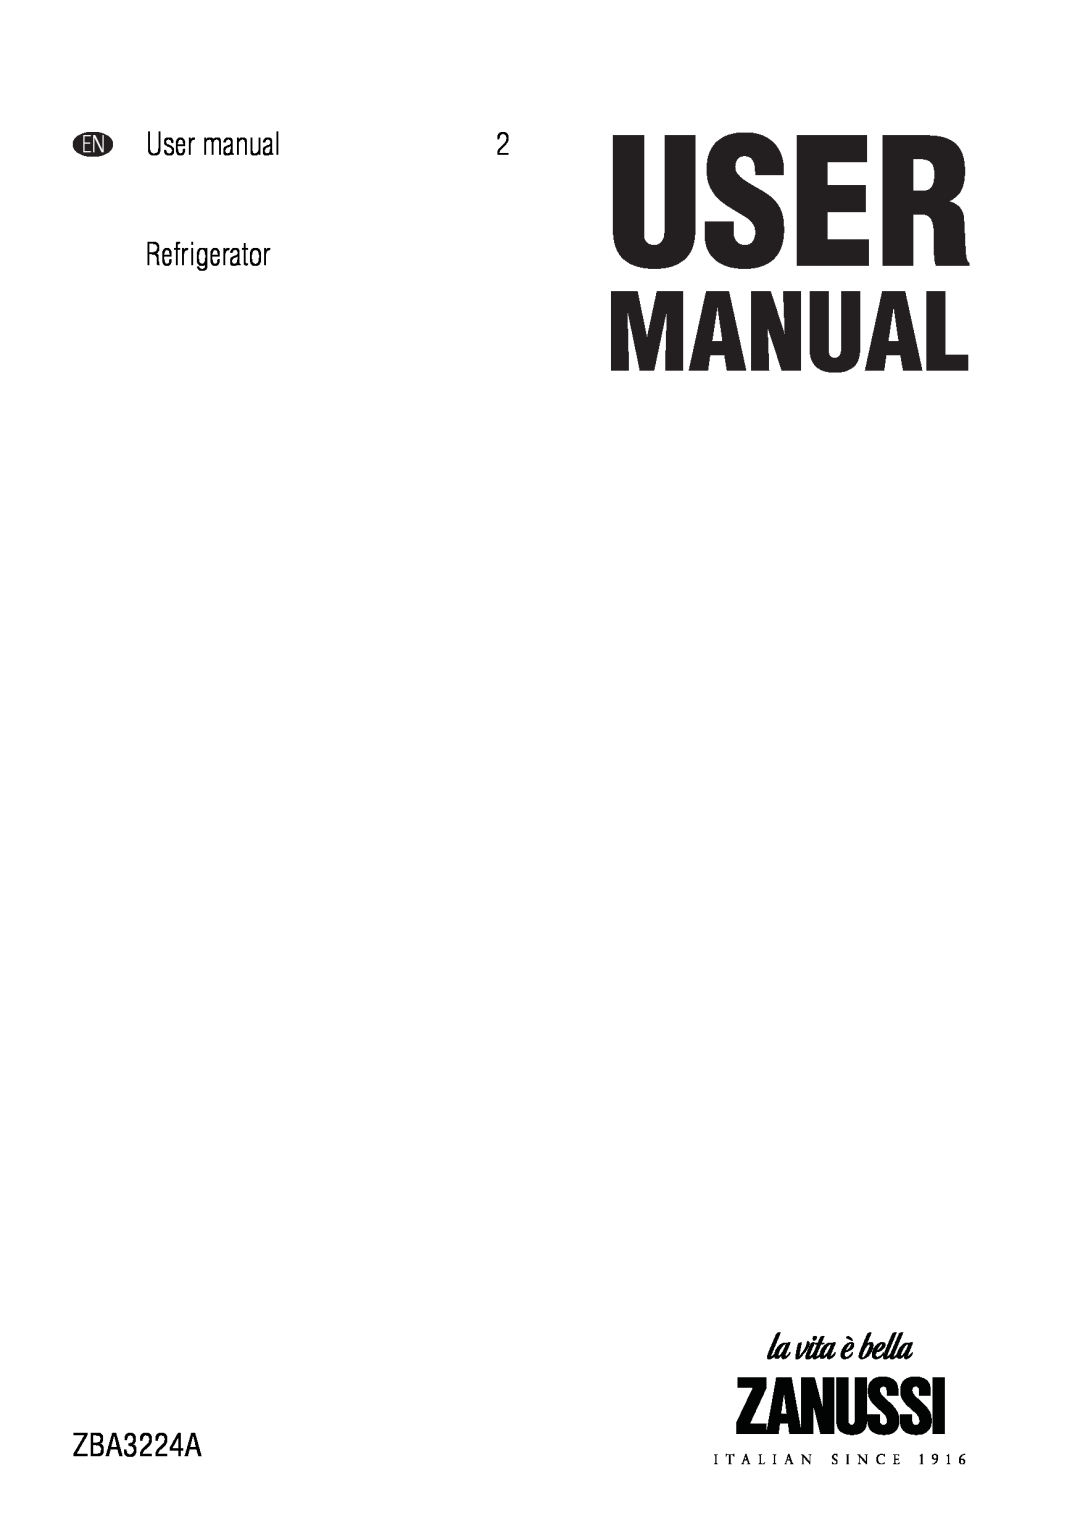 Zanussi ZBA3224A user manual User manual, Refrigerator 